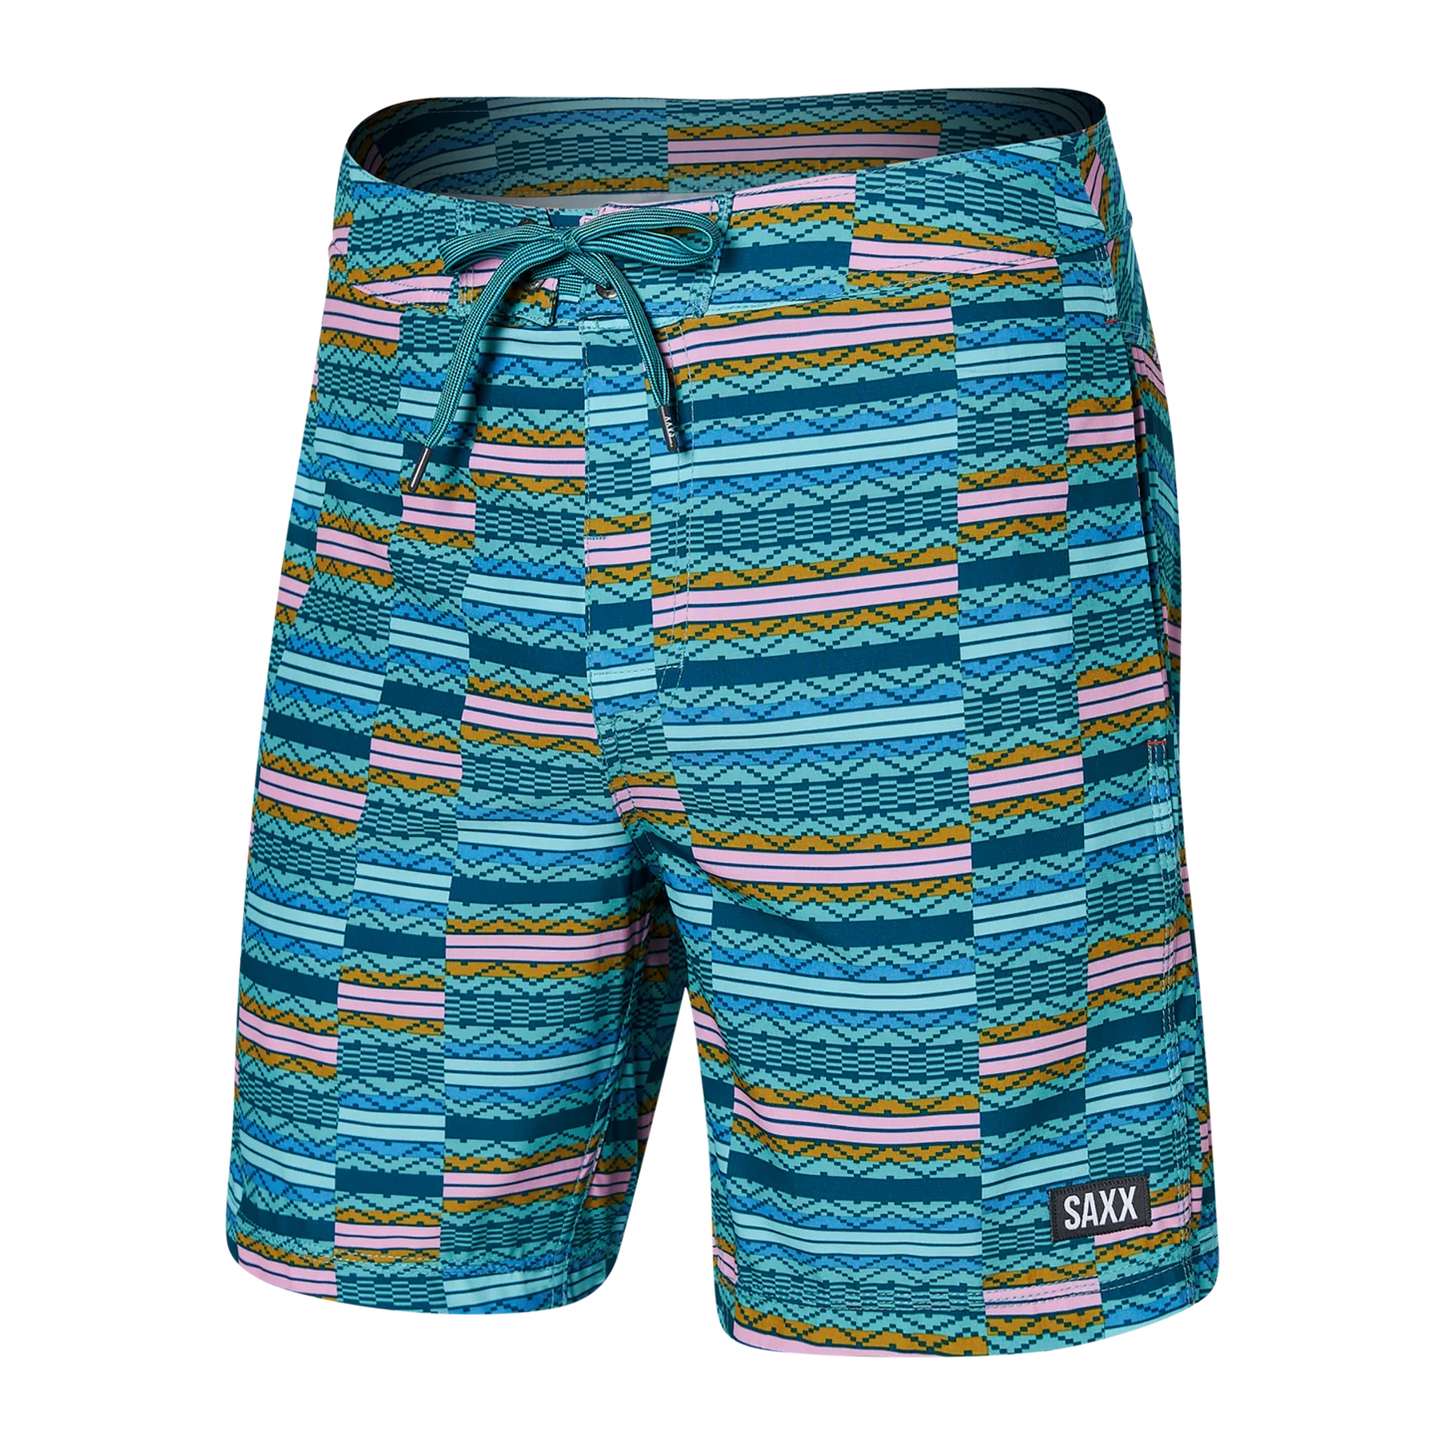 SAXX BETAWAVE Swim Shorts 7" / Asher Stripe- Sea Foam